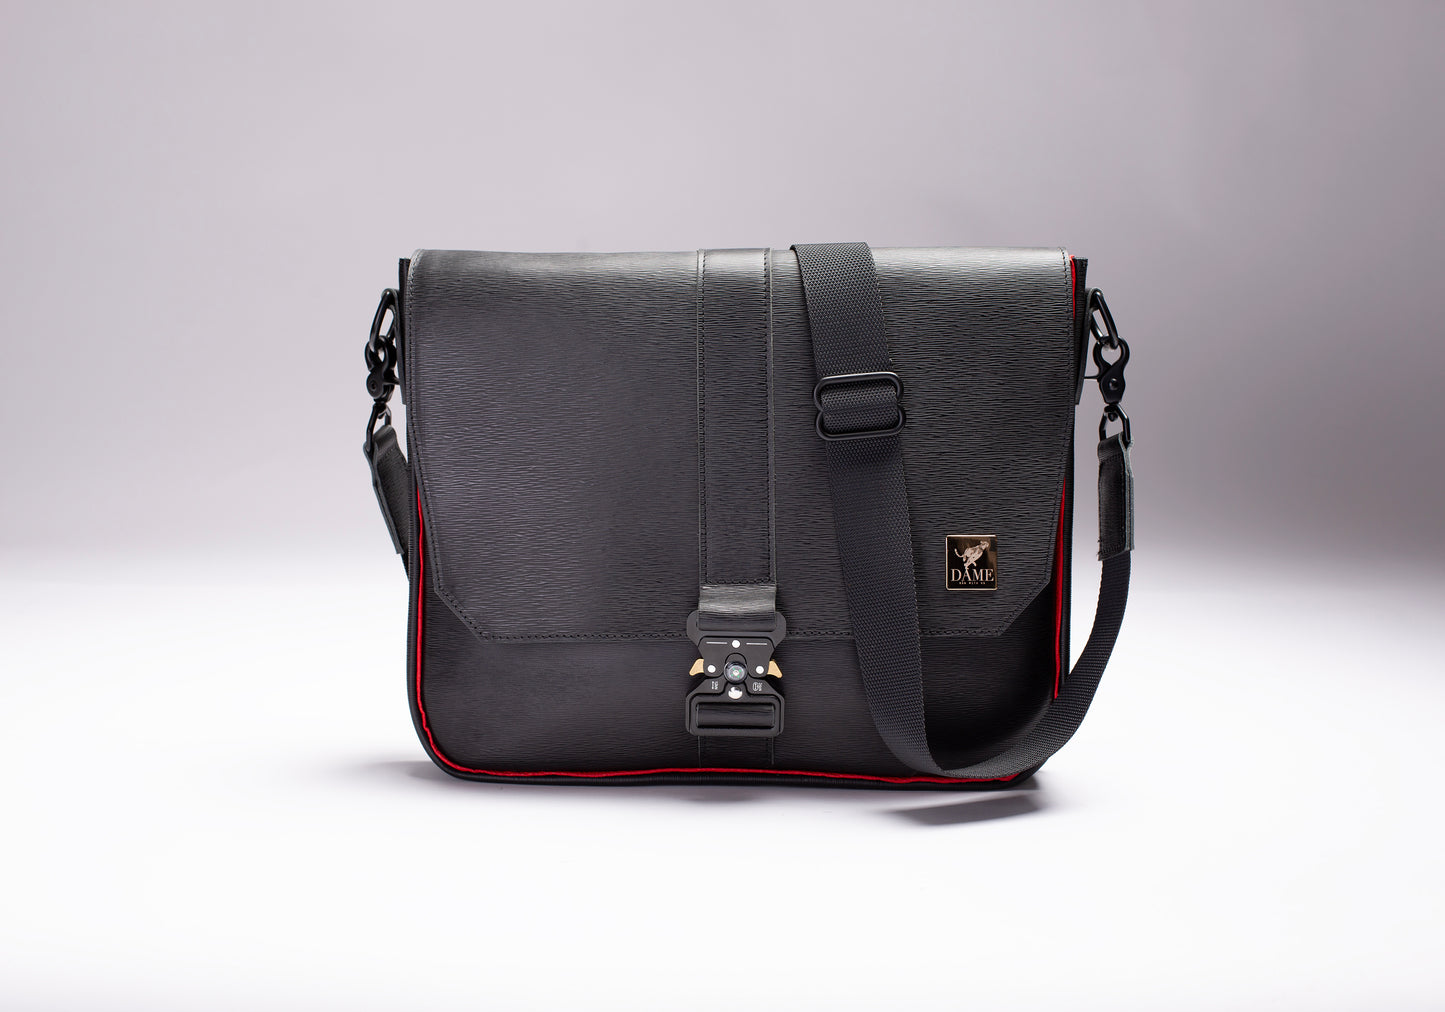 Look 3: The Lenox Messenger Bag & The Roxbury Duffle Bag